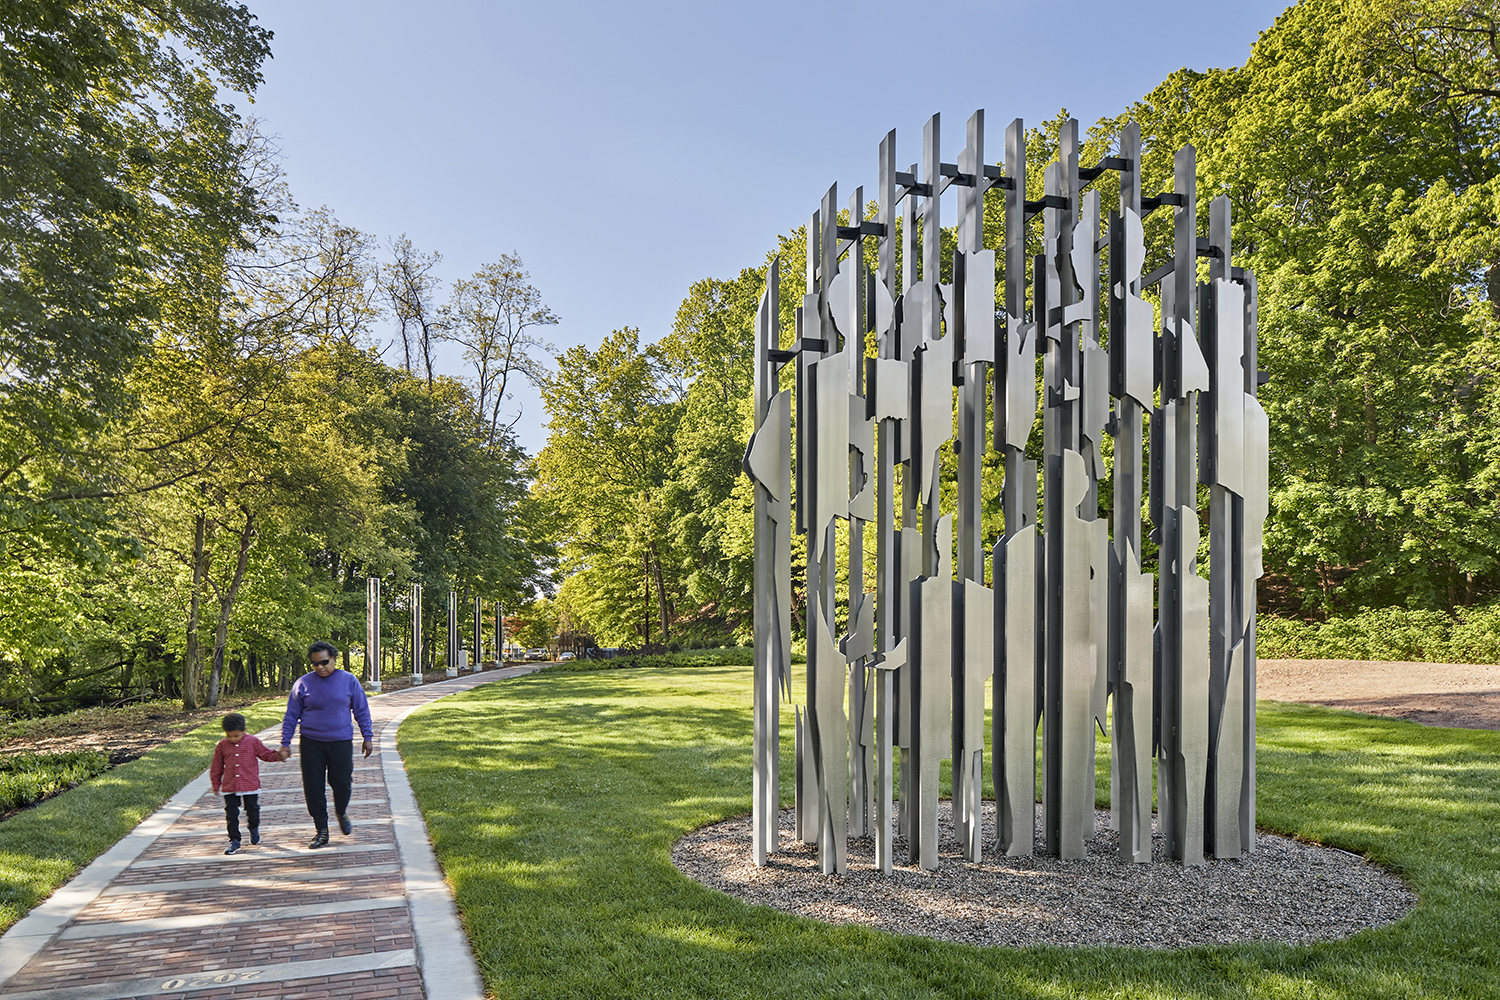 New Haven Botanical Garden of Healing: Dedicated to Victims of Gun Violence - CODAworx